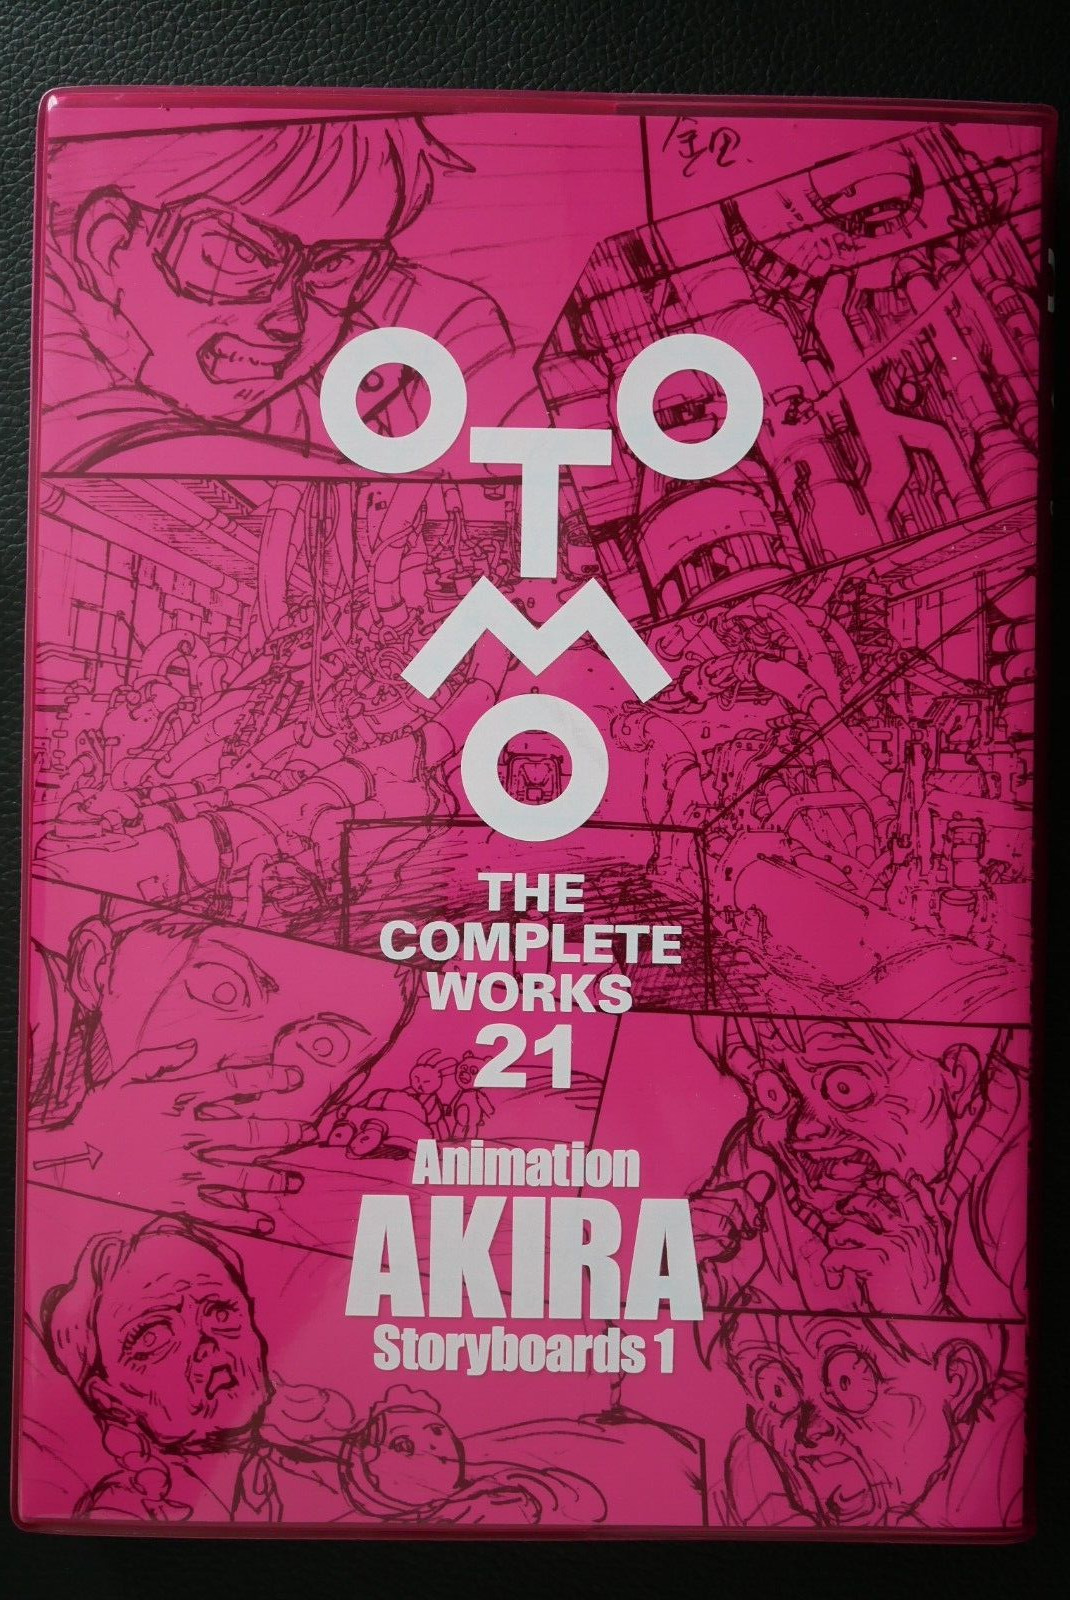 JAPAN Katsuhiro Otomo: Otomo The Complete Works 21 Animation AKIRA Storyboards 1